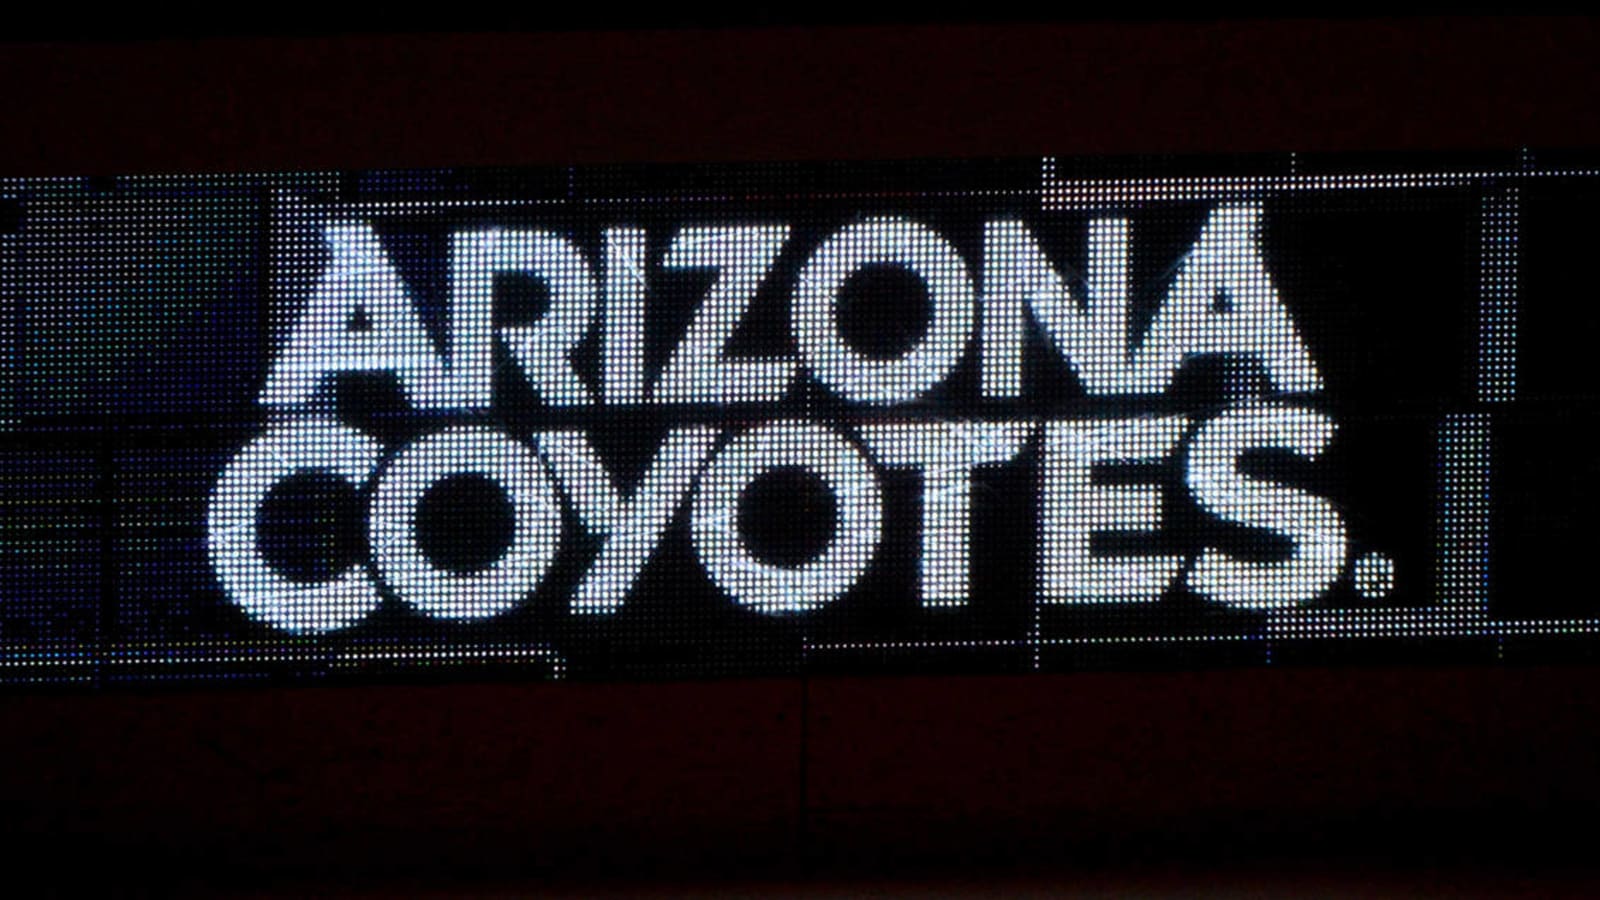 Arizona Coyotes staff members laid off, furloughed